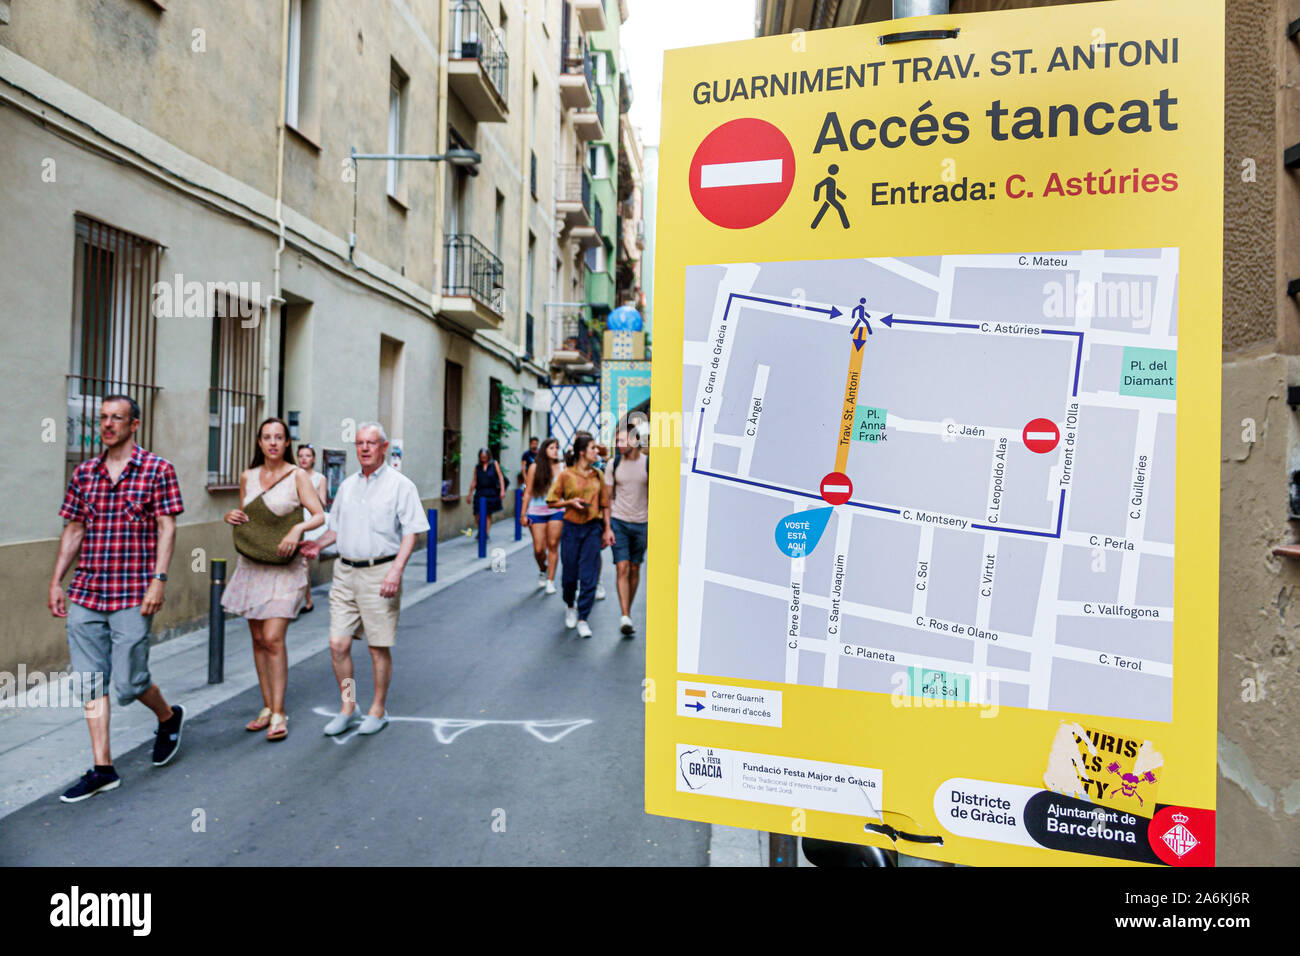 Barcelona Spain,Catalonia Gracia,neighborhood,Festa Major de Gracia,street festival fair,information sign,street closures map,Catalan,ES190820167 Stock Photo